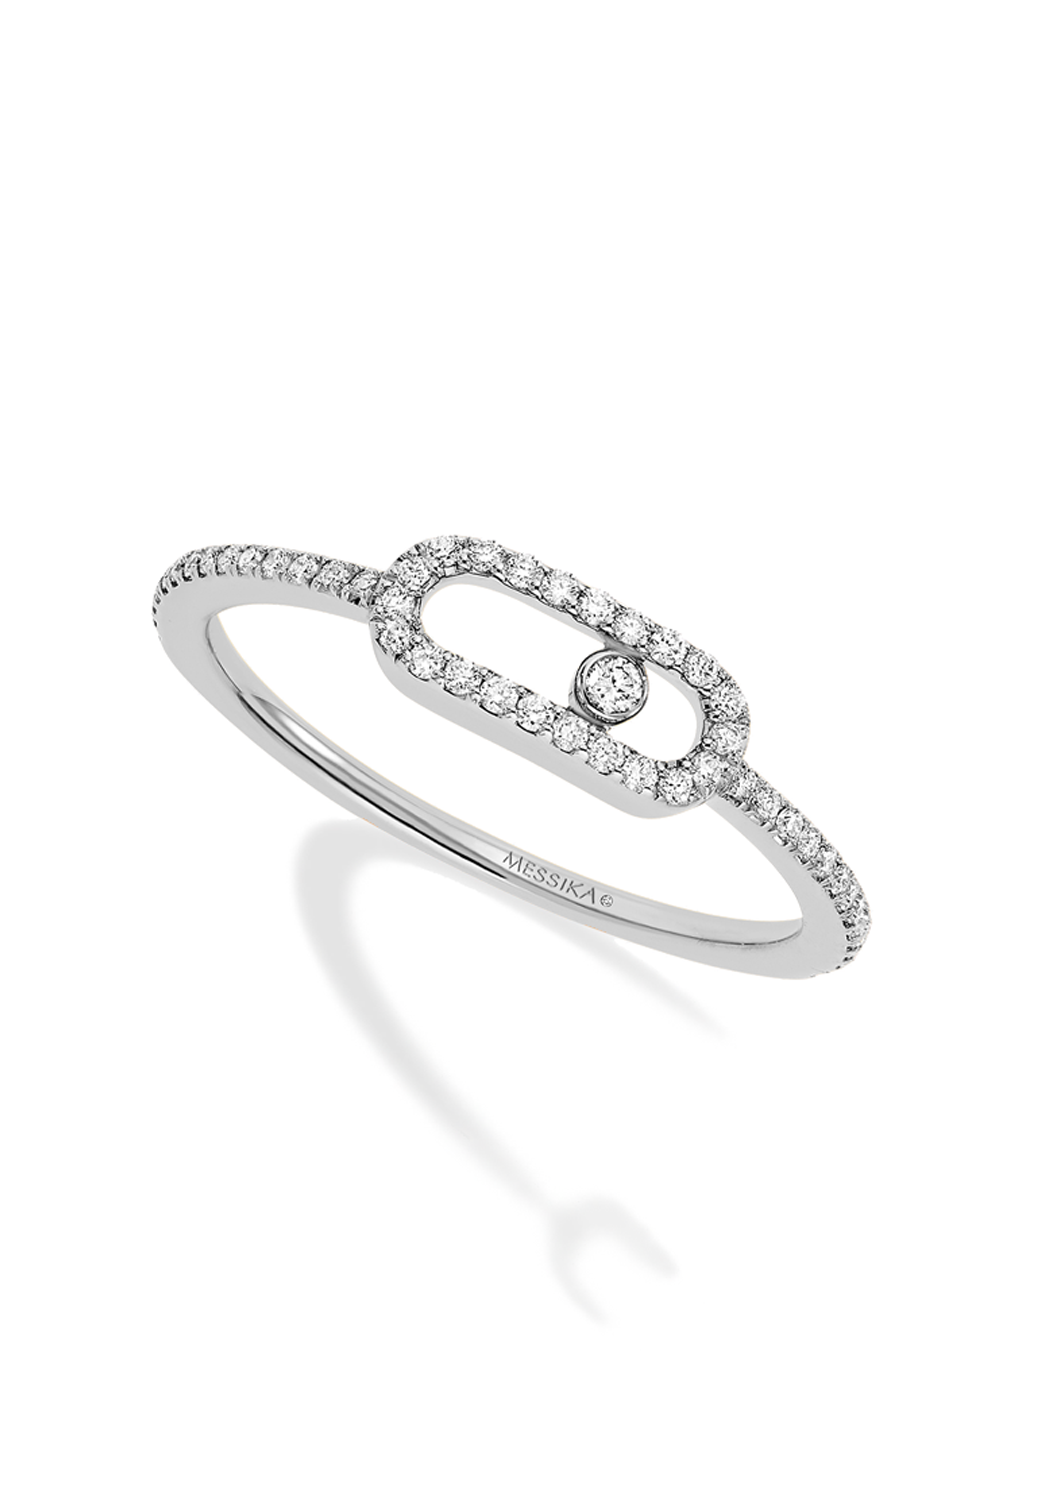 Messika Move Uno Pavé 18KWG Diamond Ring | Ref. 05630-WG | OsterJewelers.com